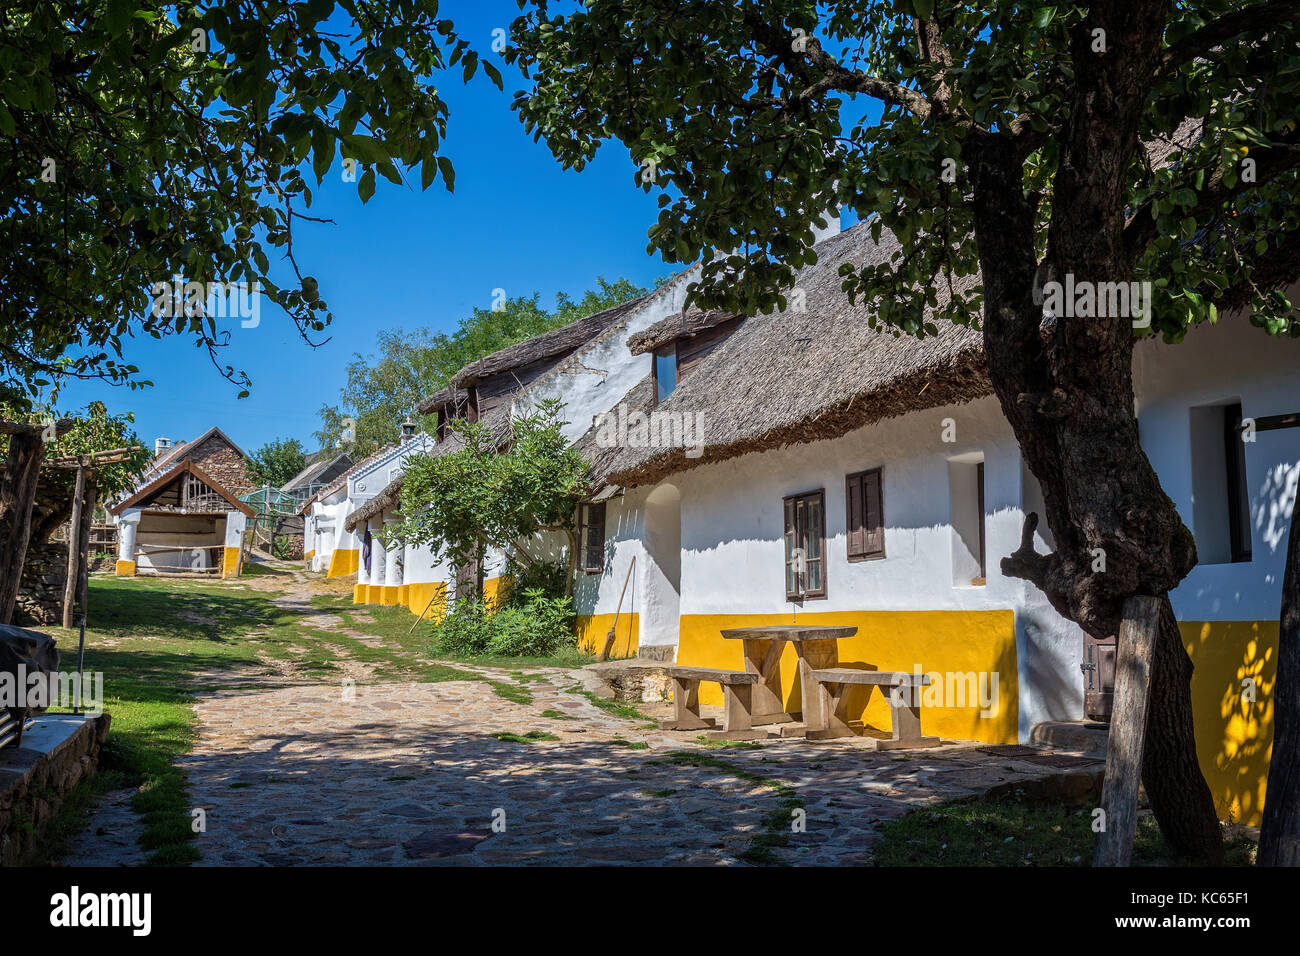 Traditional houses from Hungary, near lake Balaton, village Salfold Stock Photo